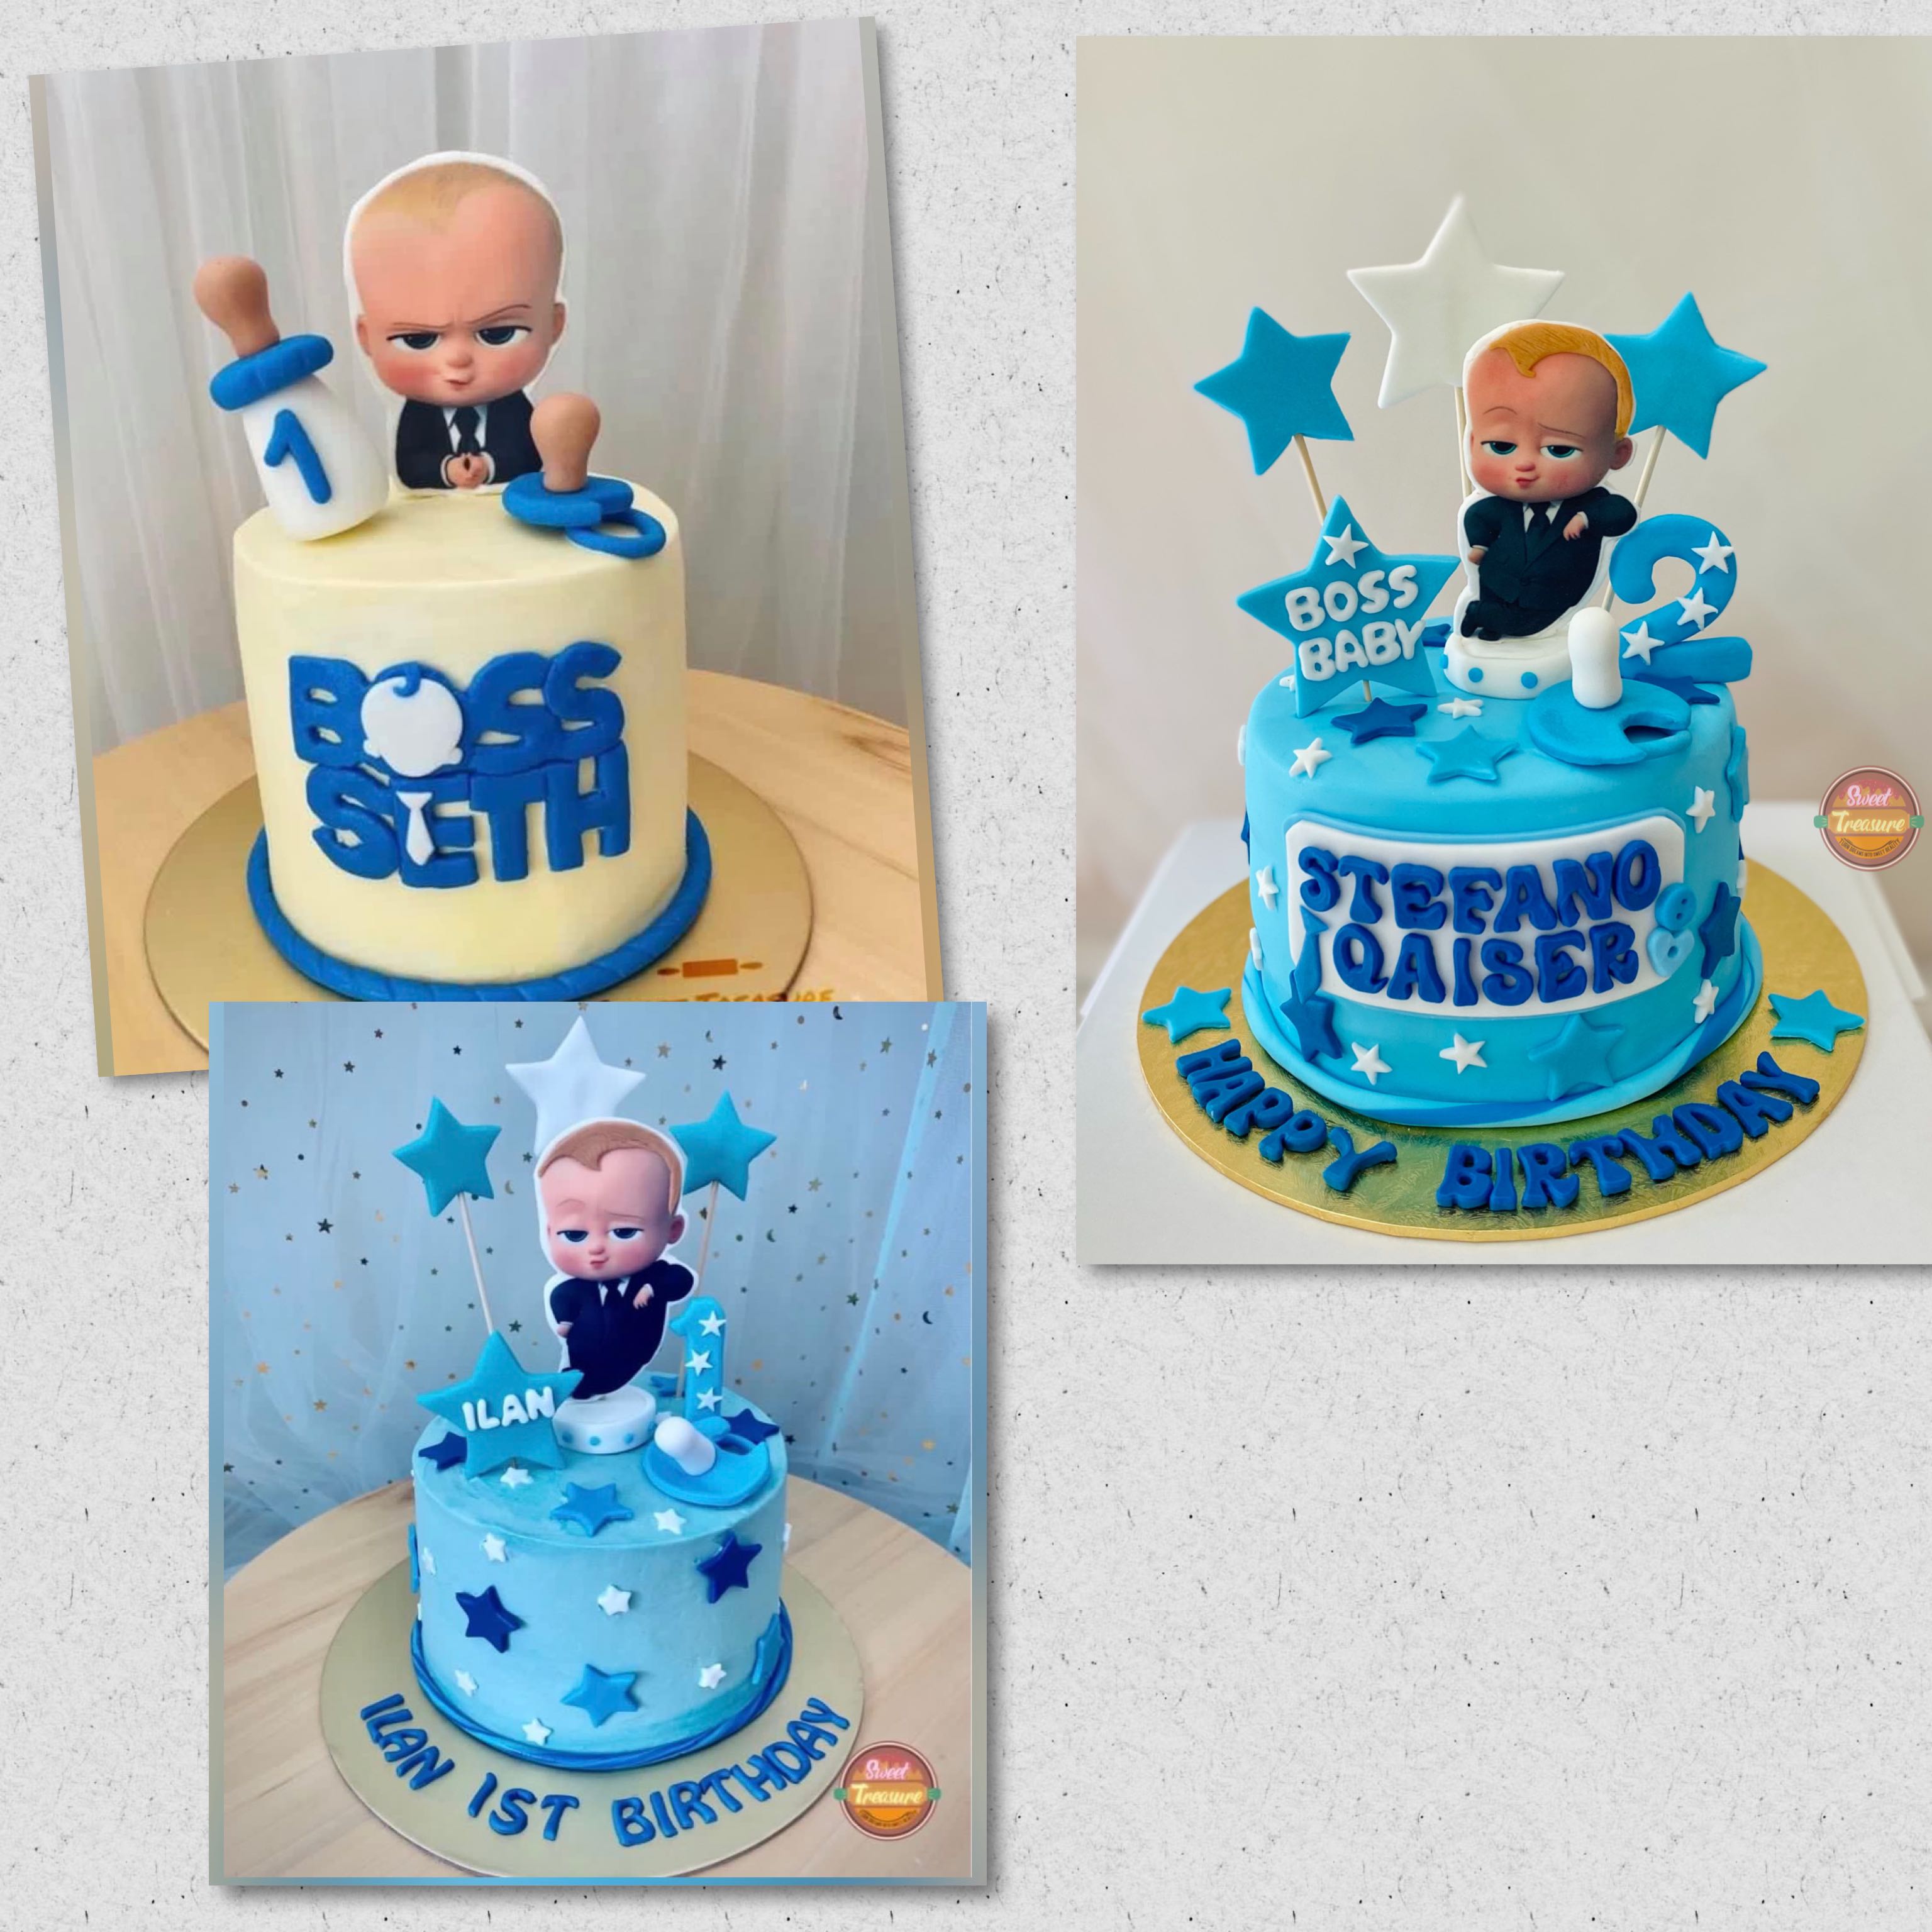 Boss Baby Half Birthday Theme Cake – Cakes All The Way